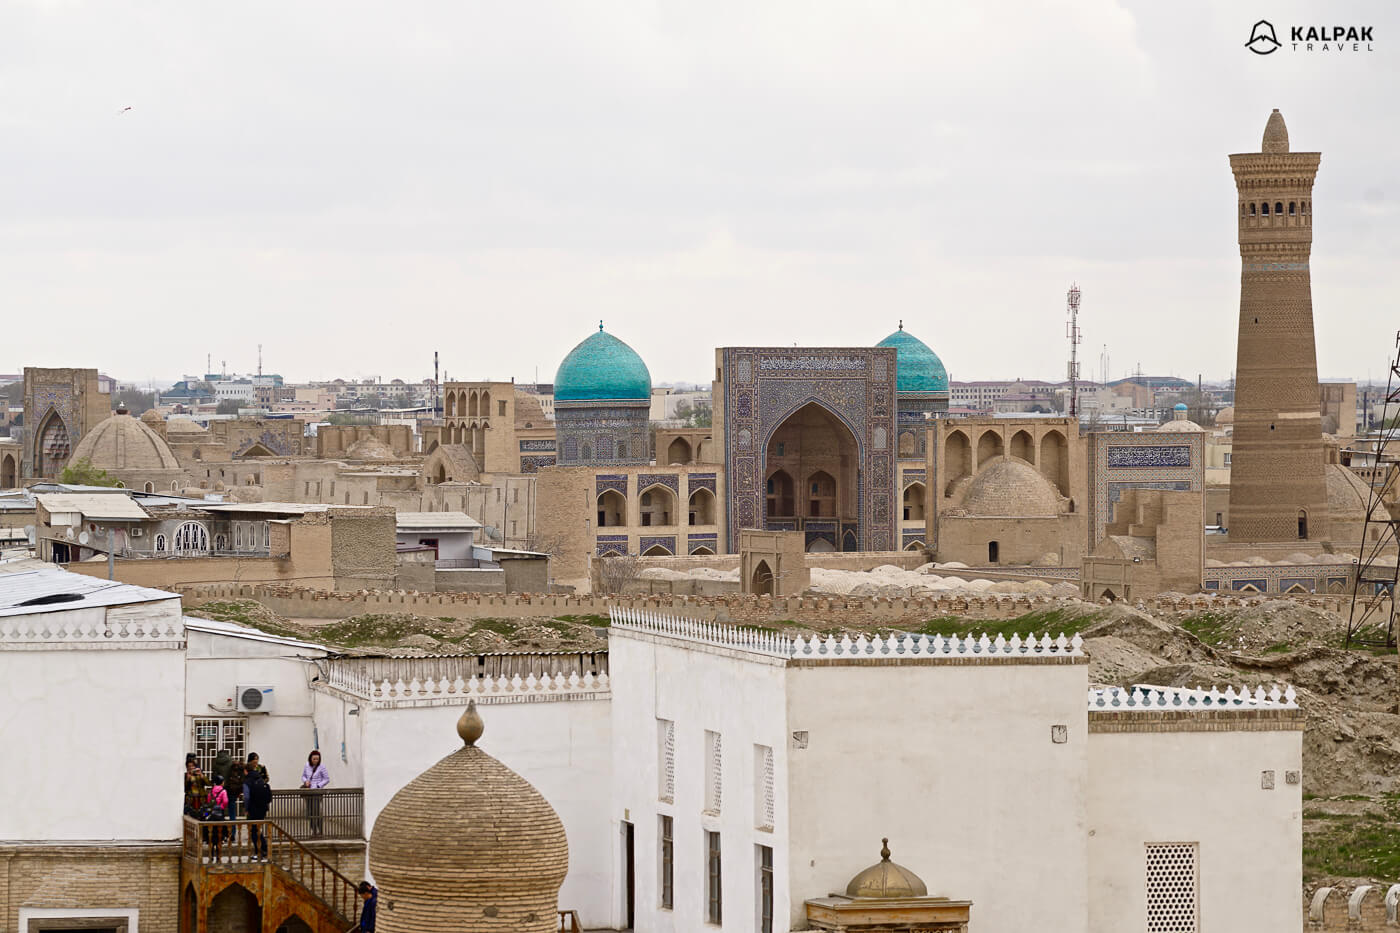 Bukhara is the Silk Road city in Uzbekistan